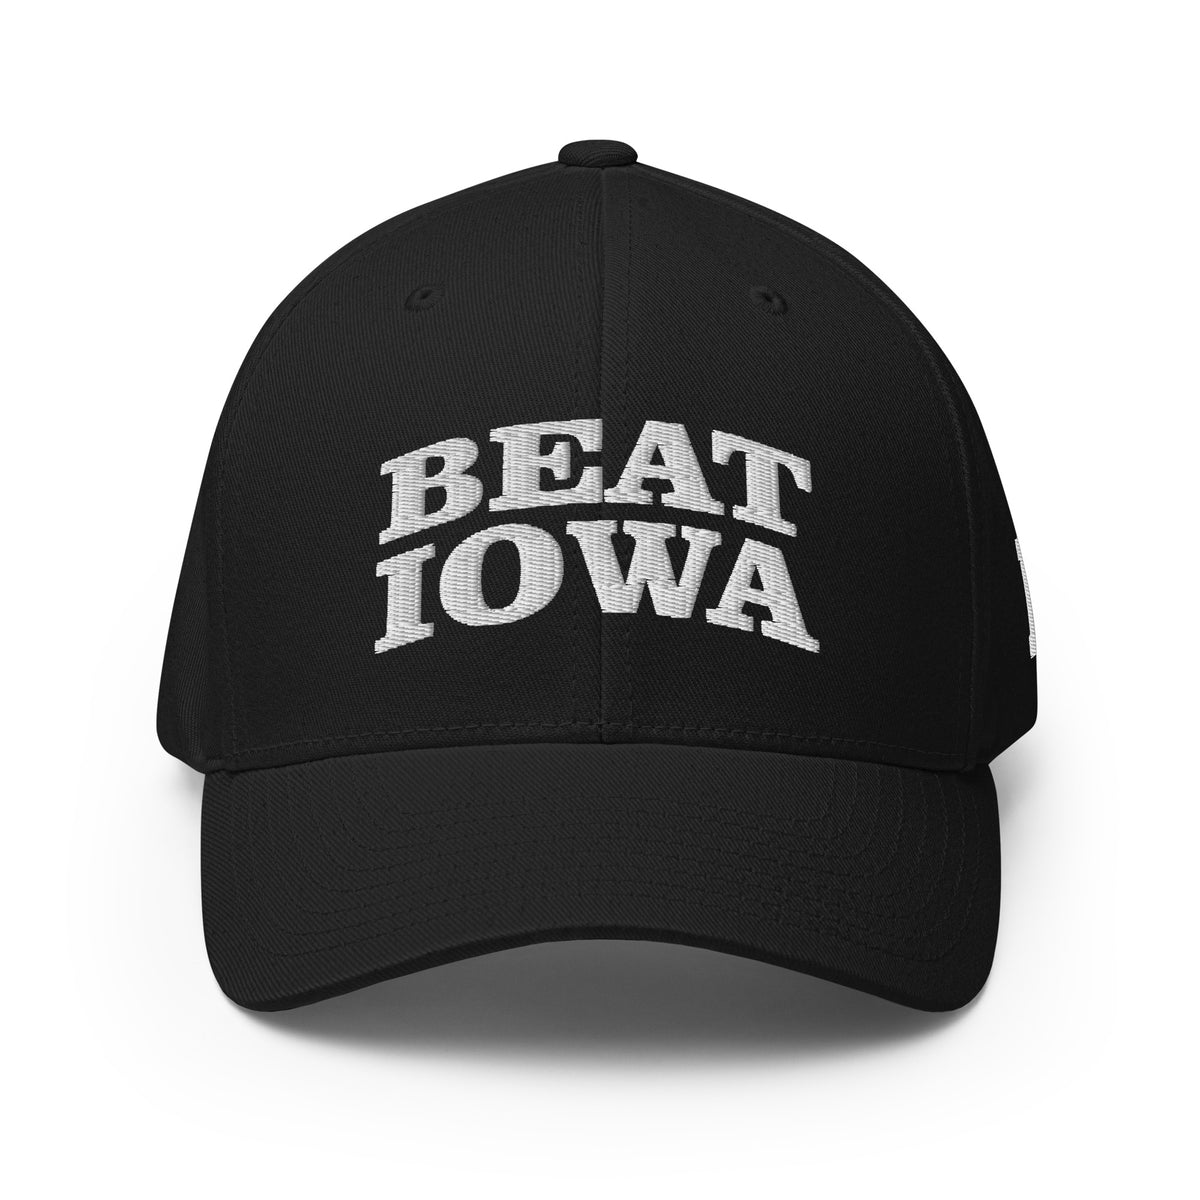 Beat Iowa Flexfit Hat - Free Shipping